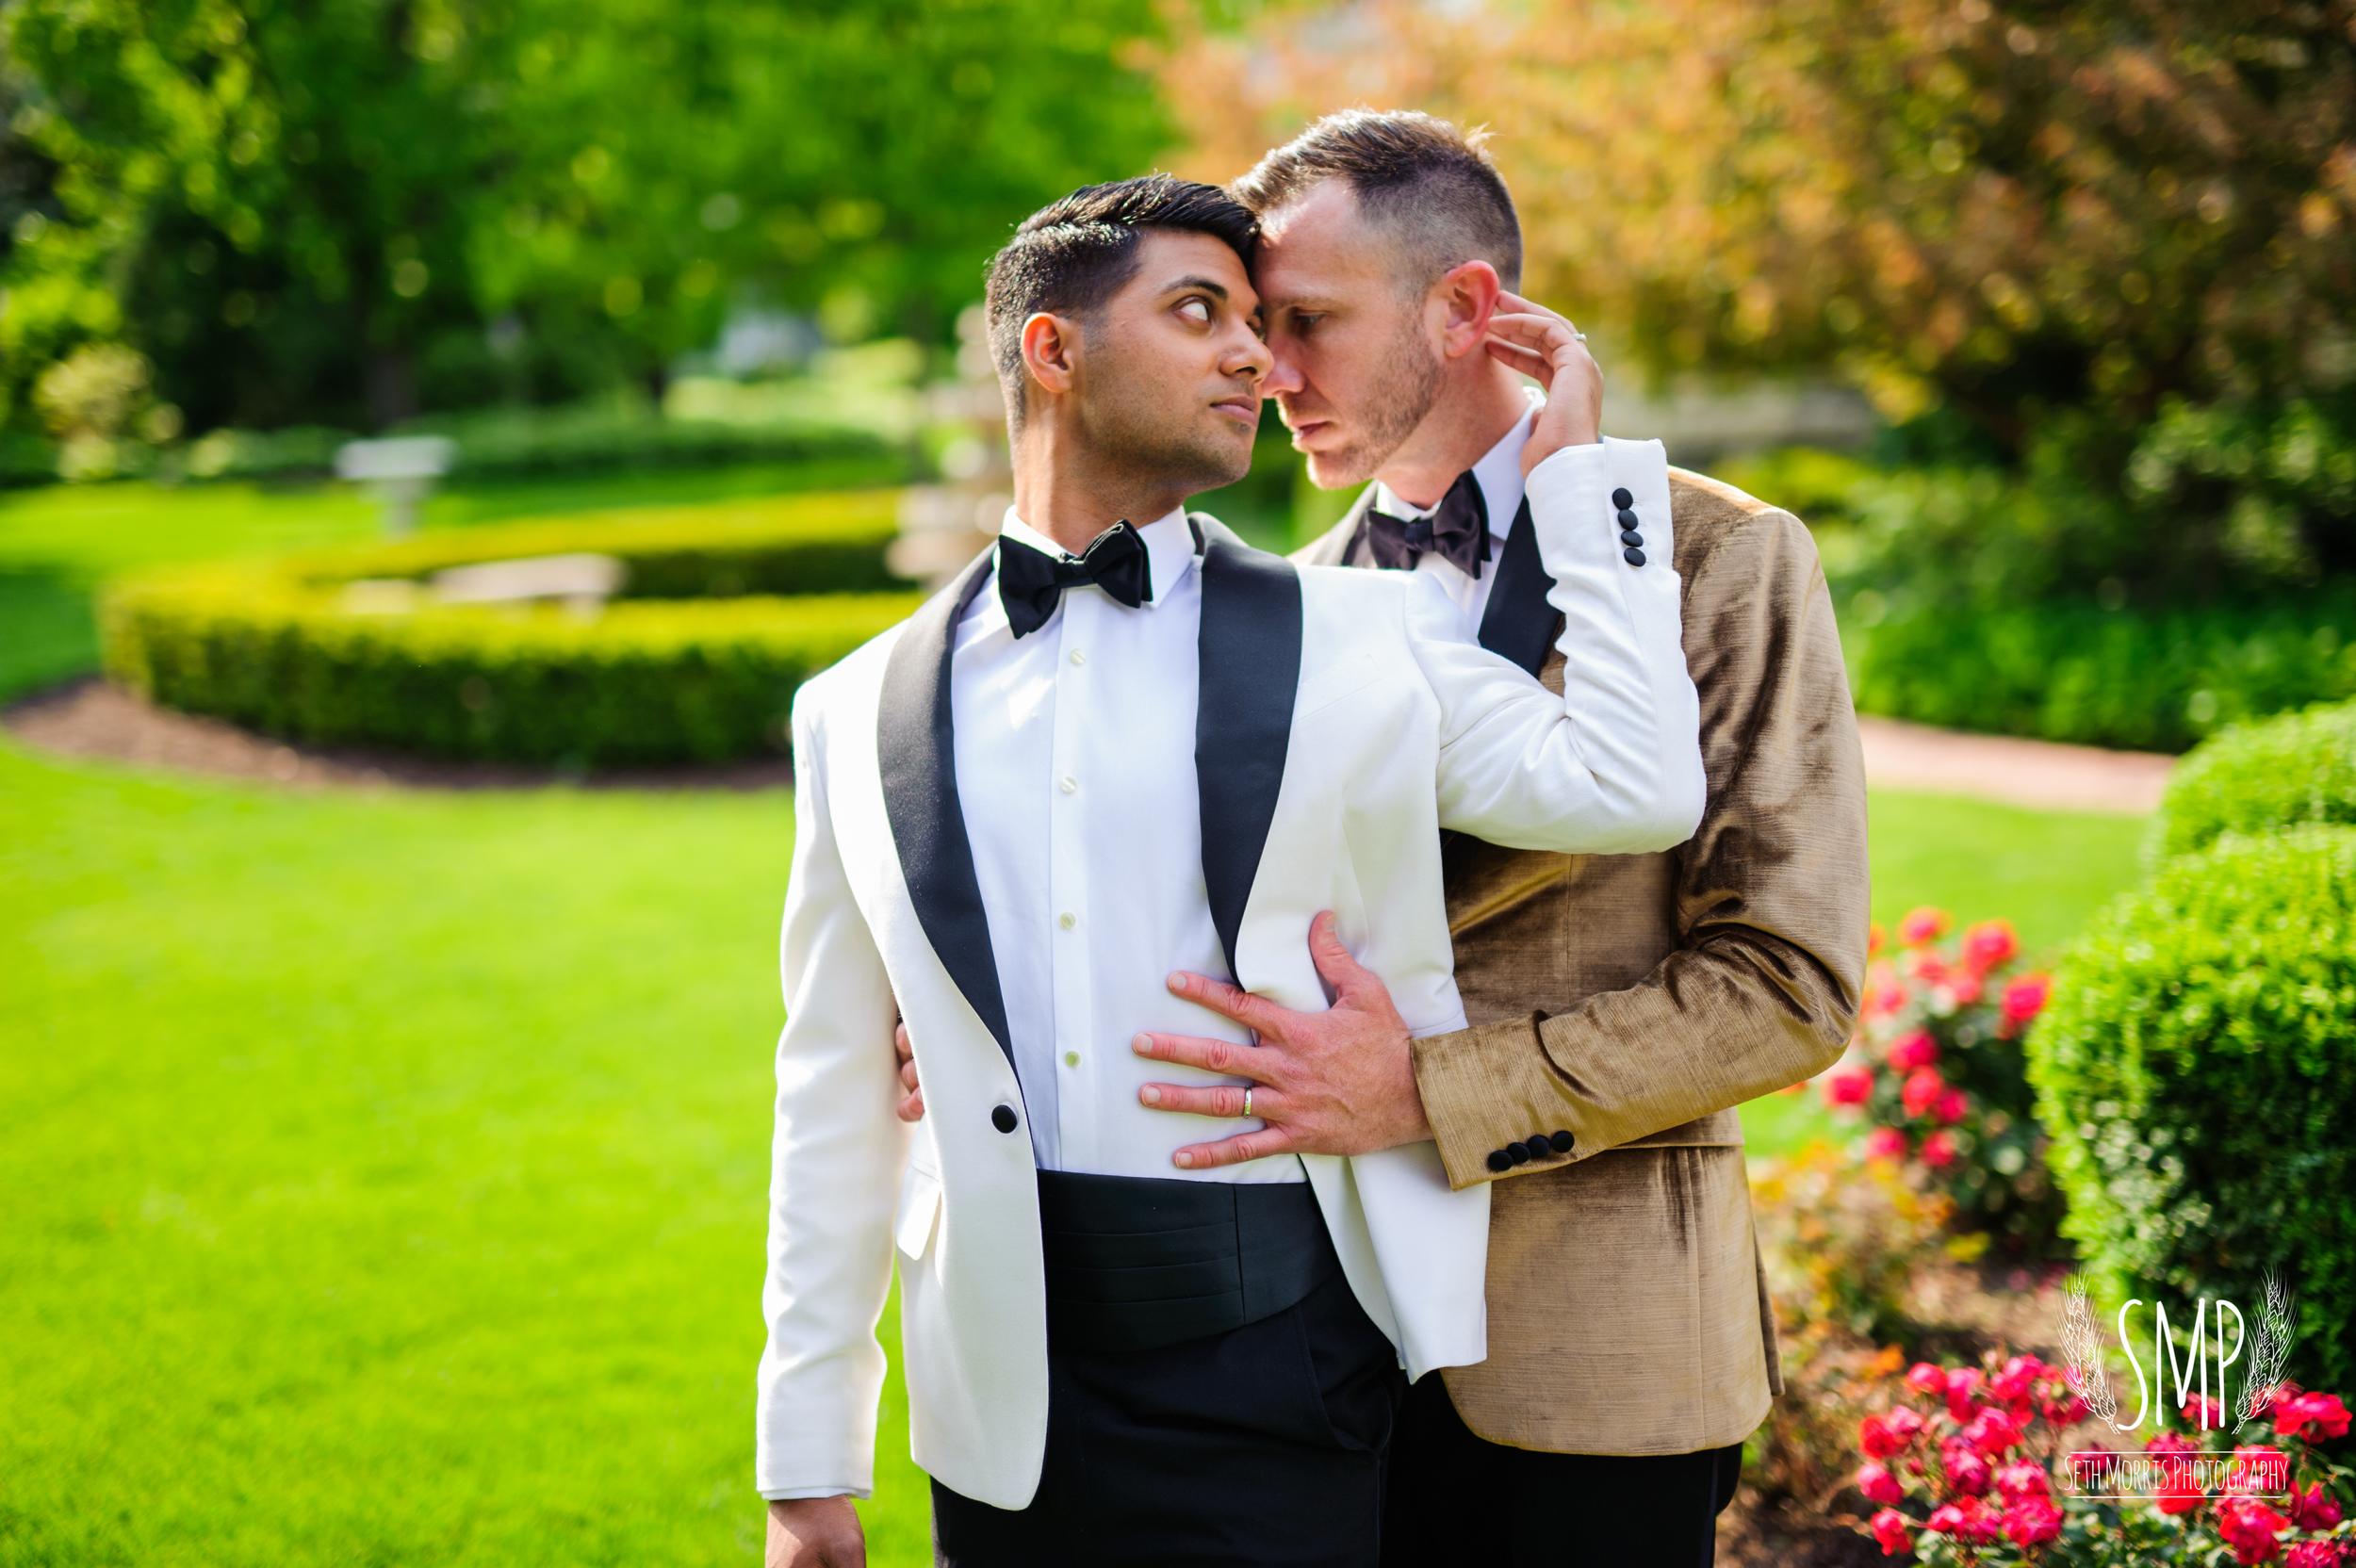 same-sex-wedding-photographer-chicago-illinois-46.jpg